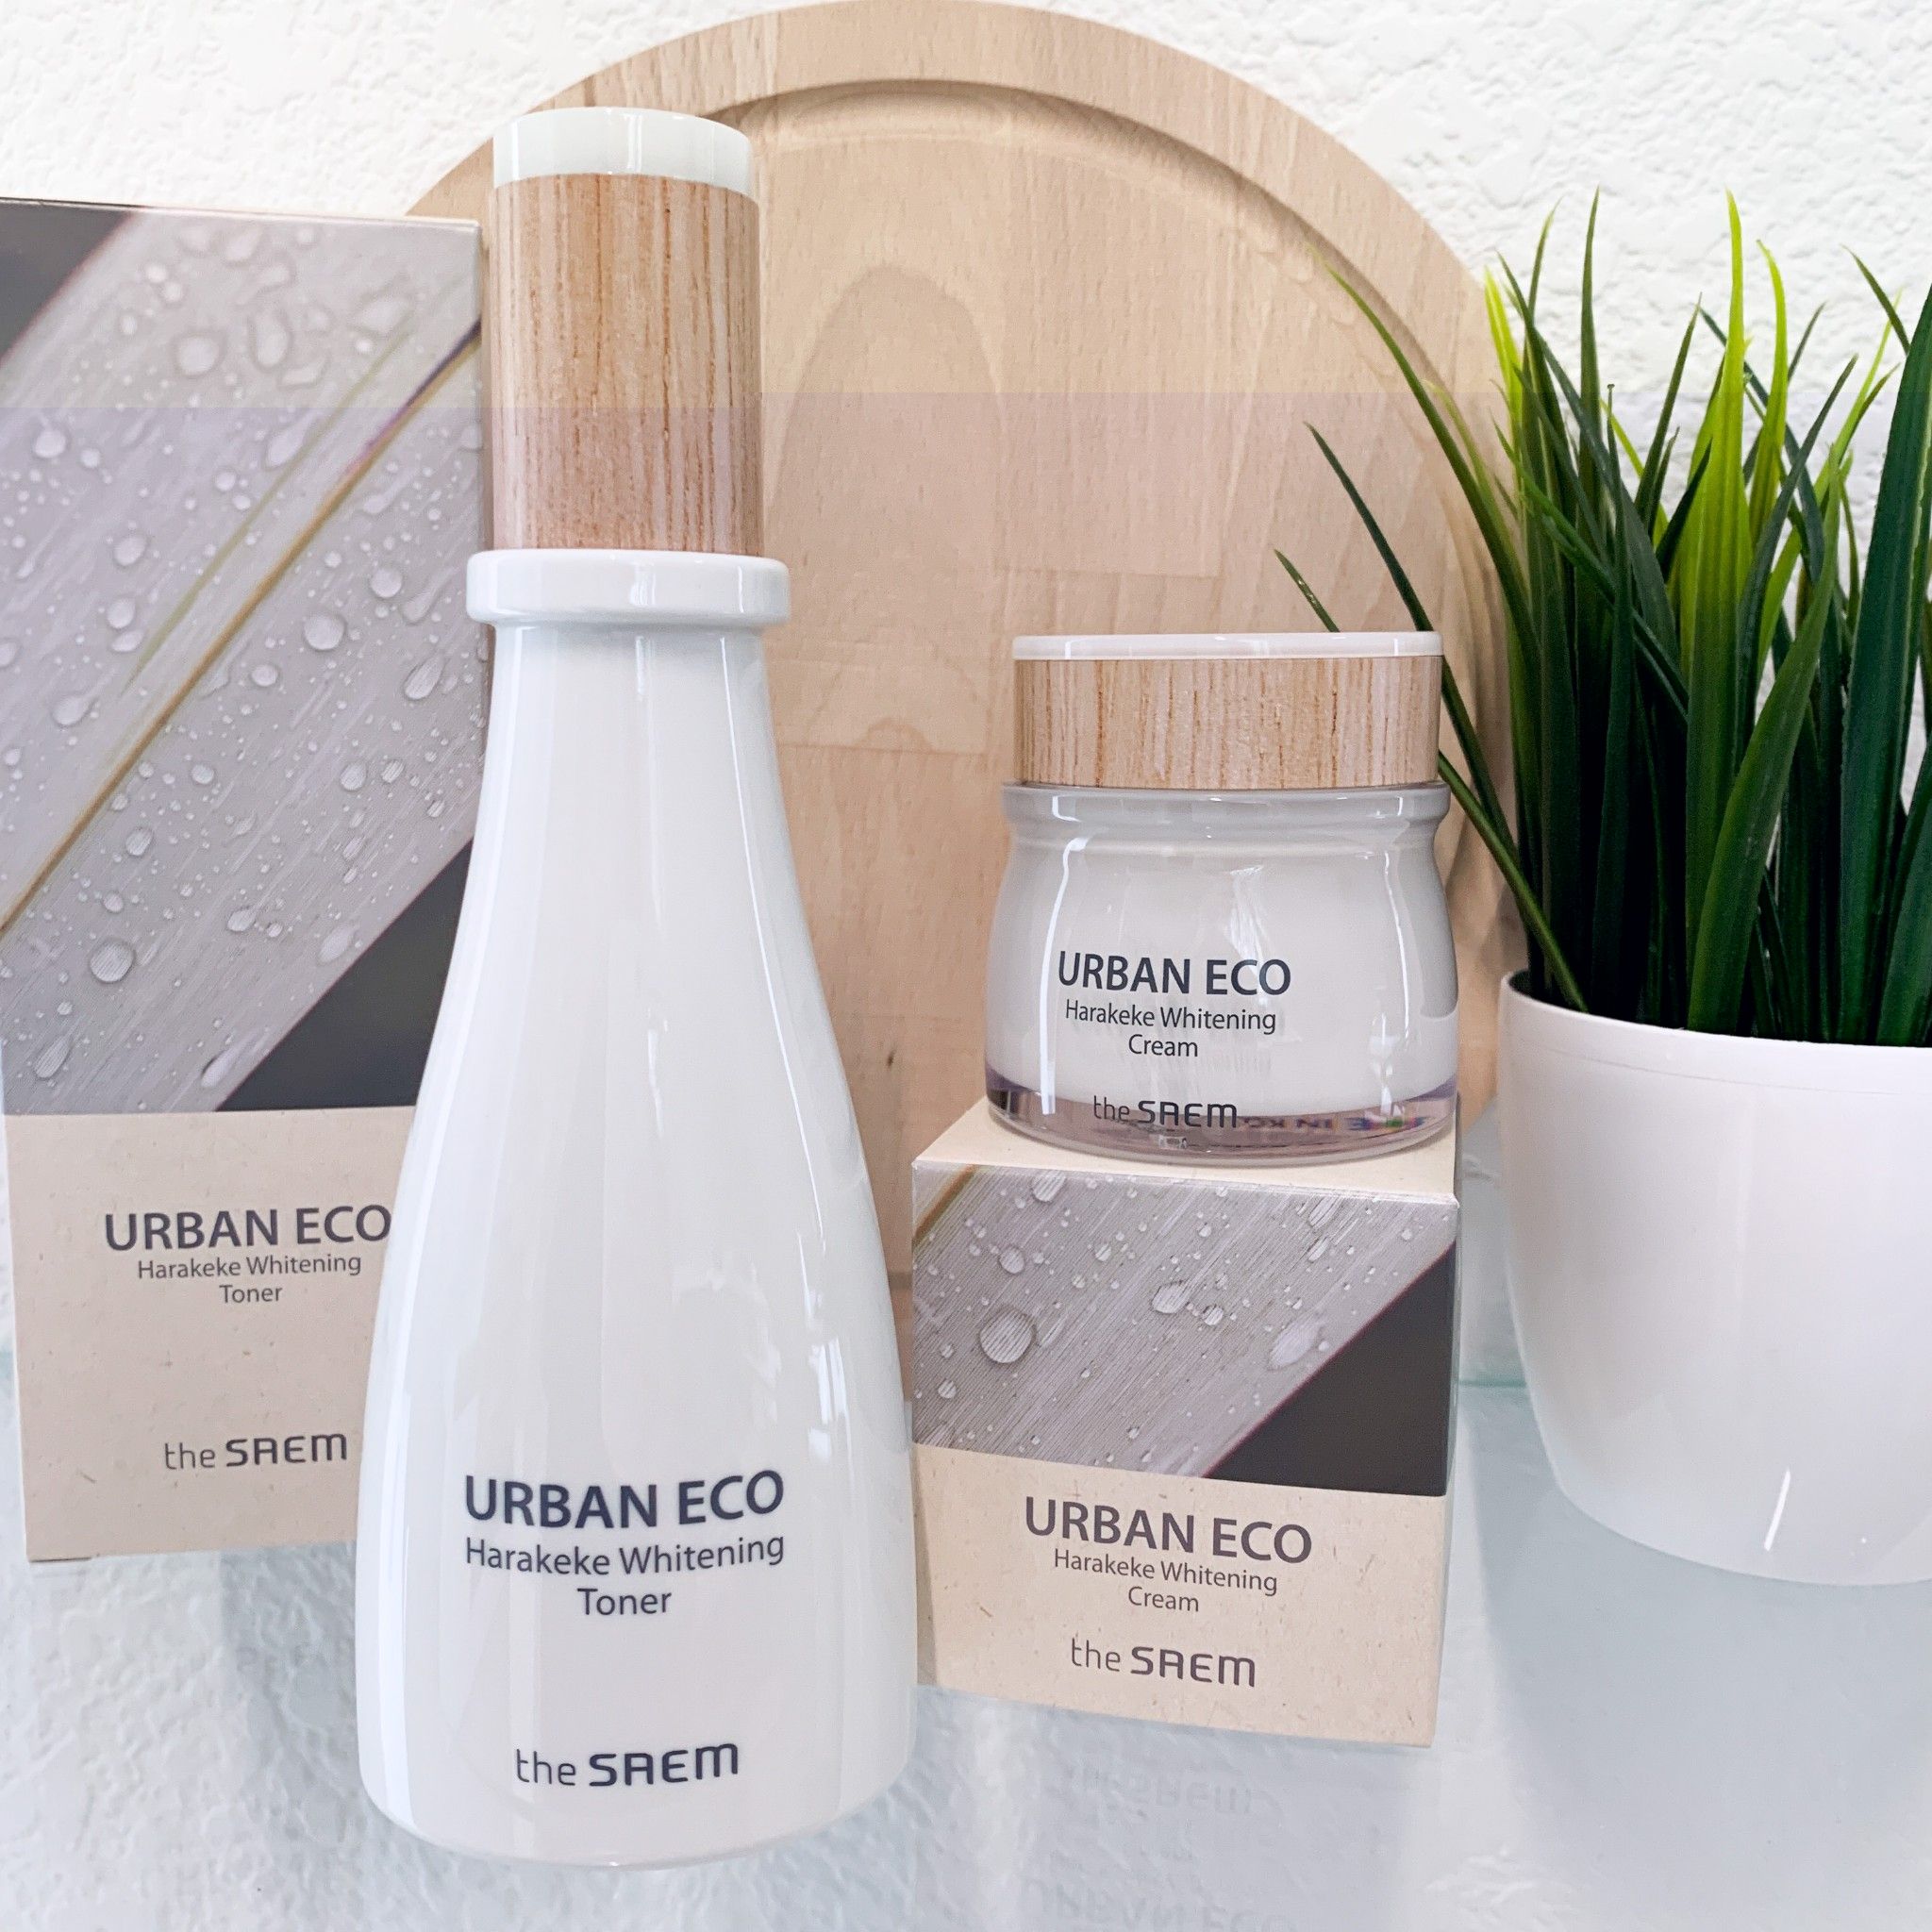  Kem dưỡng trắng da The Saem Urban Eco Harakeke Whitening Cream 